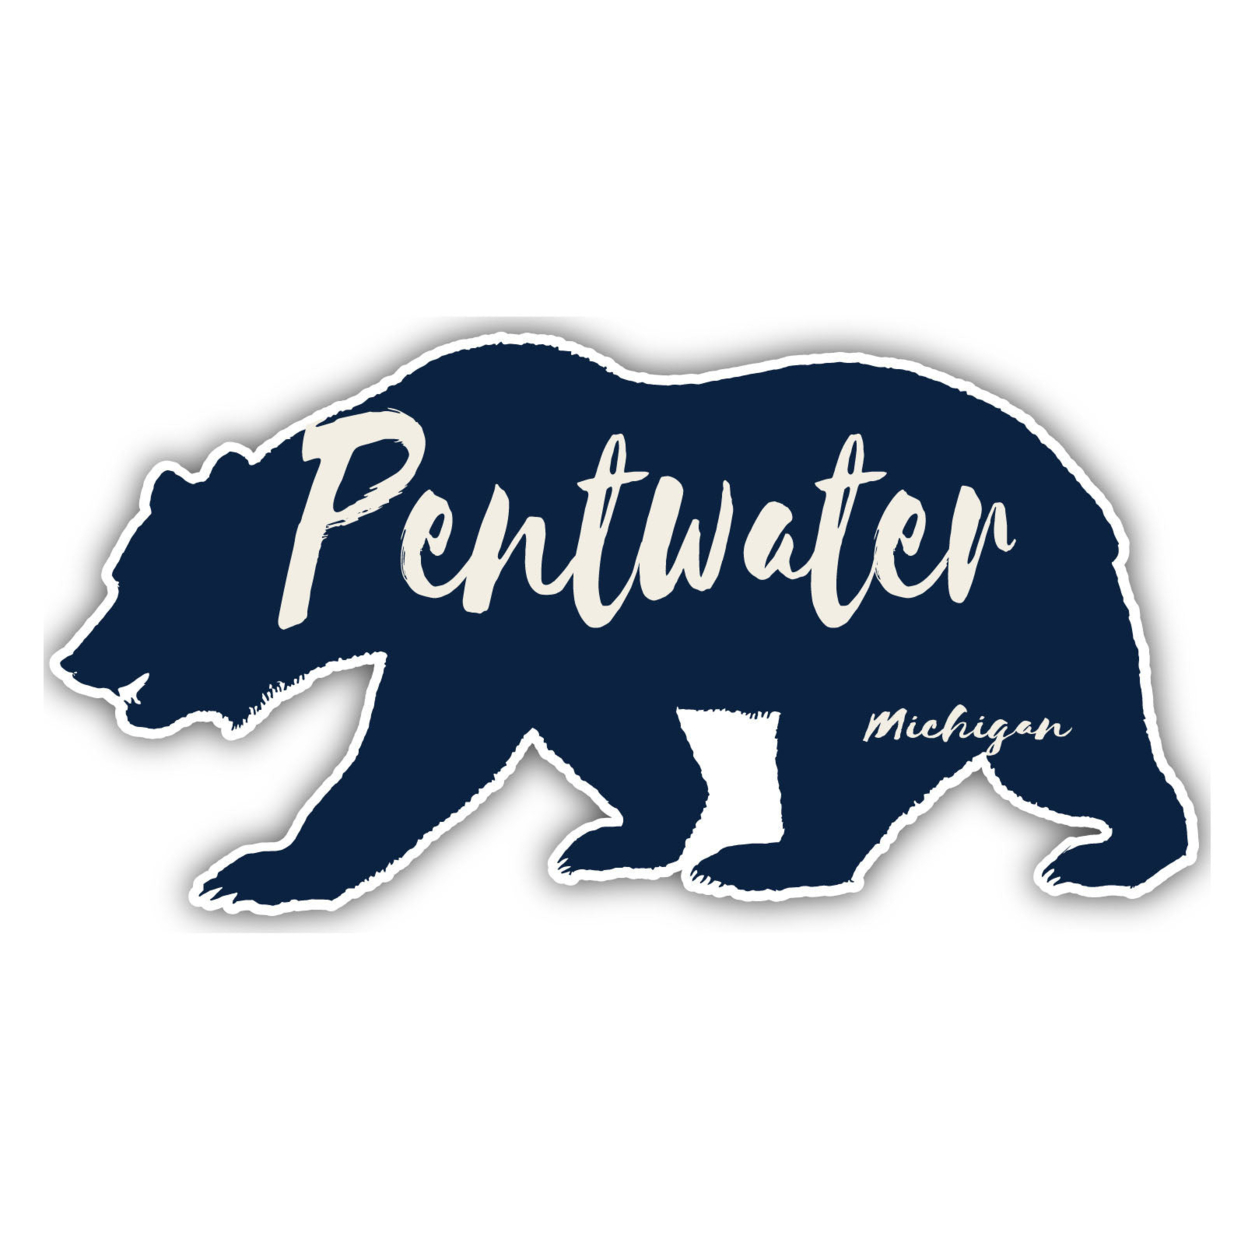 Pentwater Michigan Souvenir Decorative Stickers (Choose Theme And Size) - Single Unit, 2-Inch, Tent